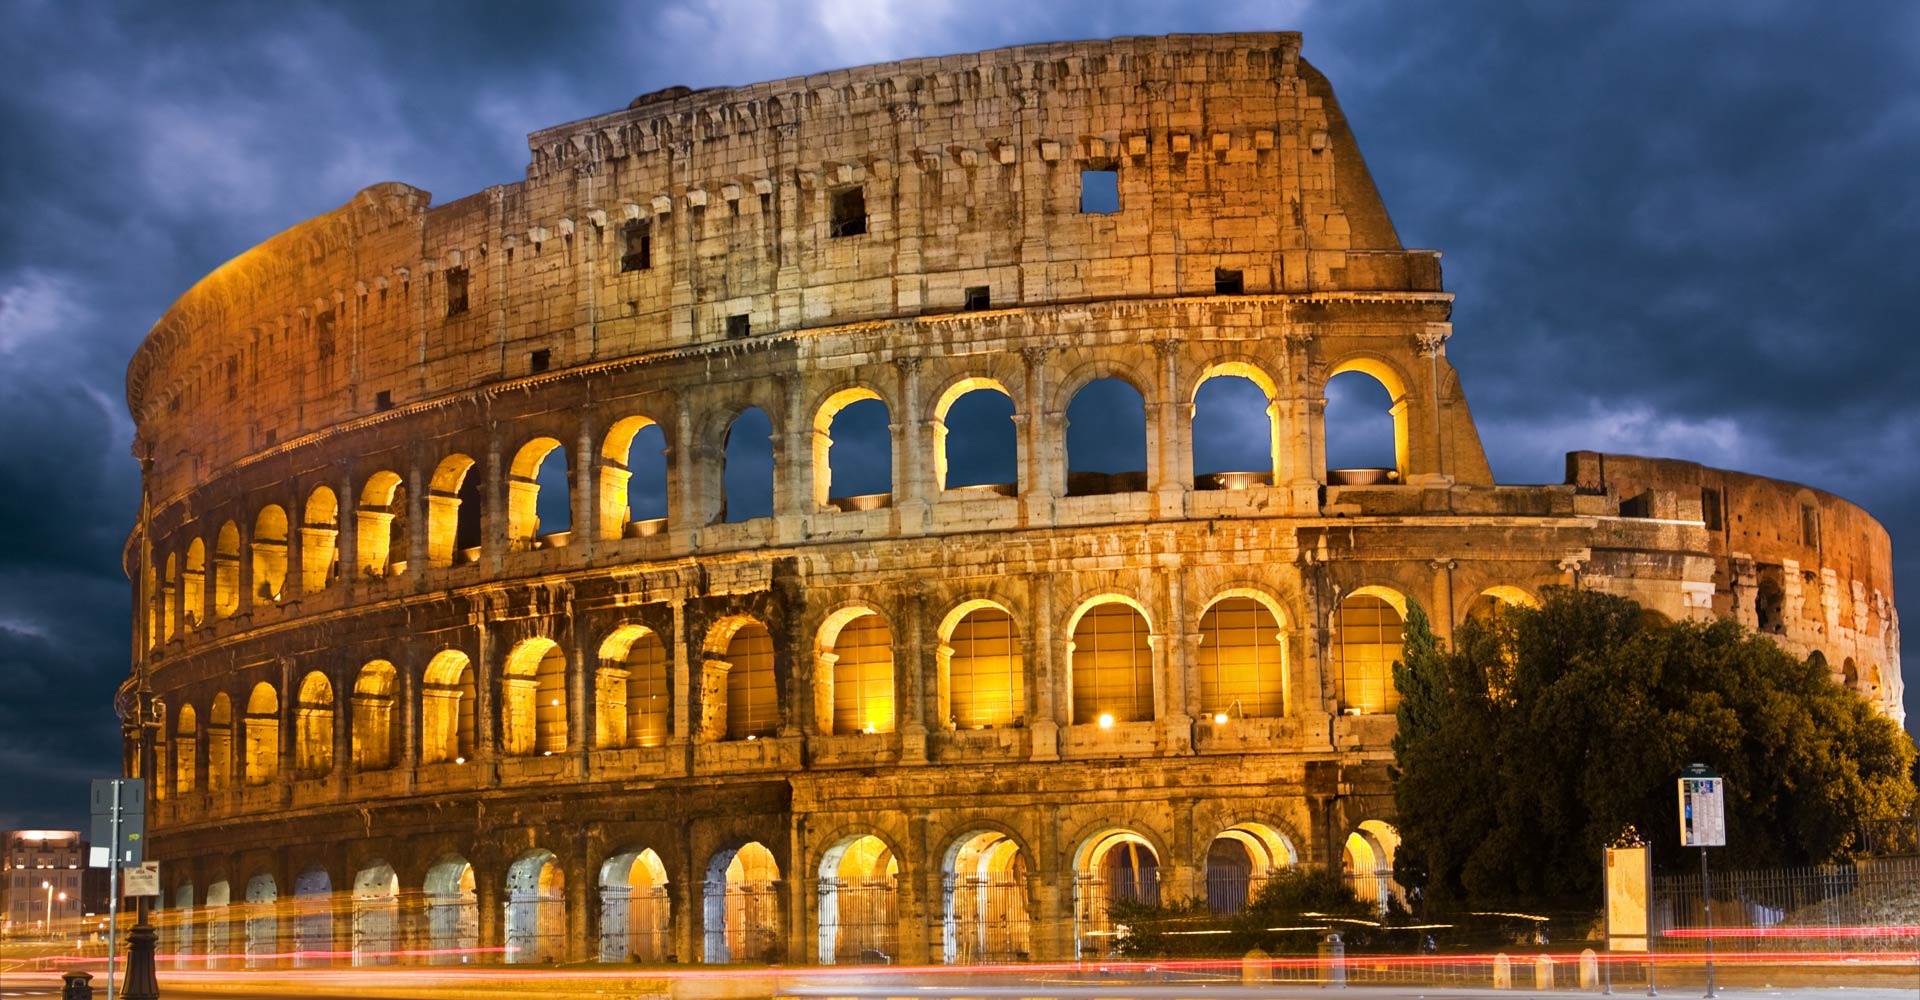  35/5000 The Coliseum as symbol of Rome.